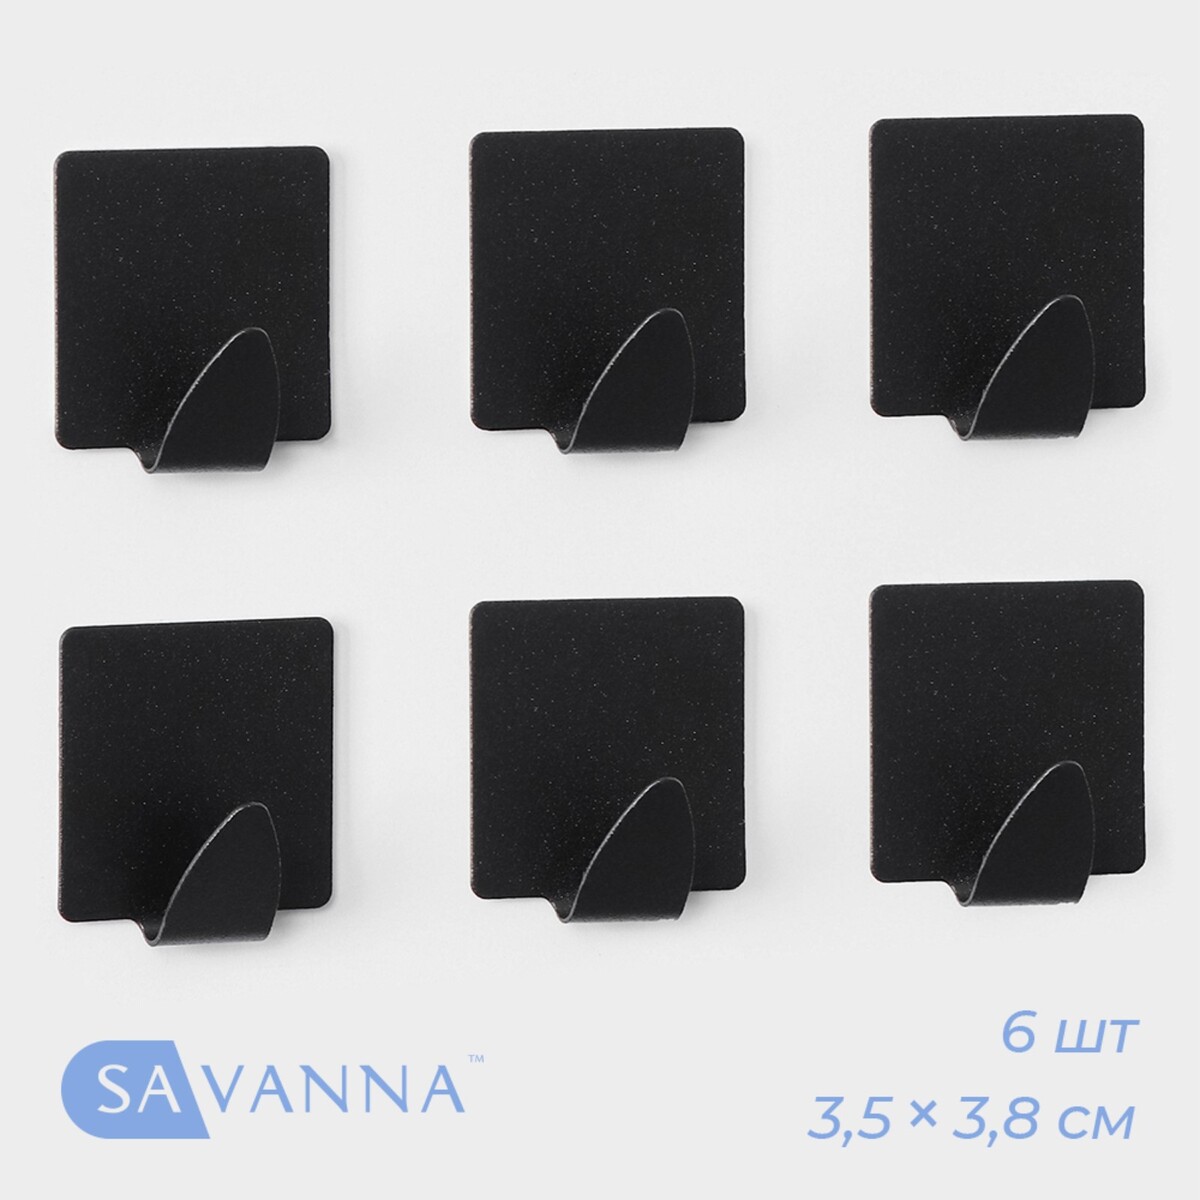     savanna black loft box, 6 , 3, 5 3, 8 1, 8 